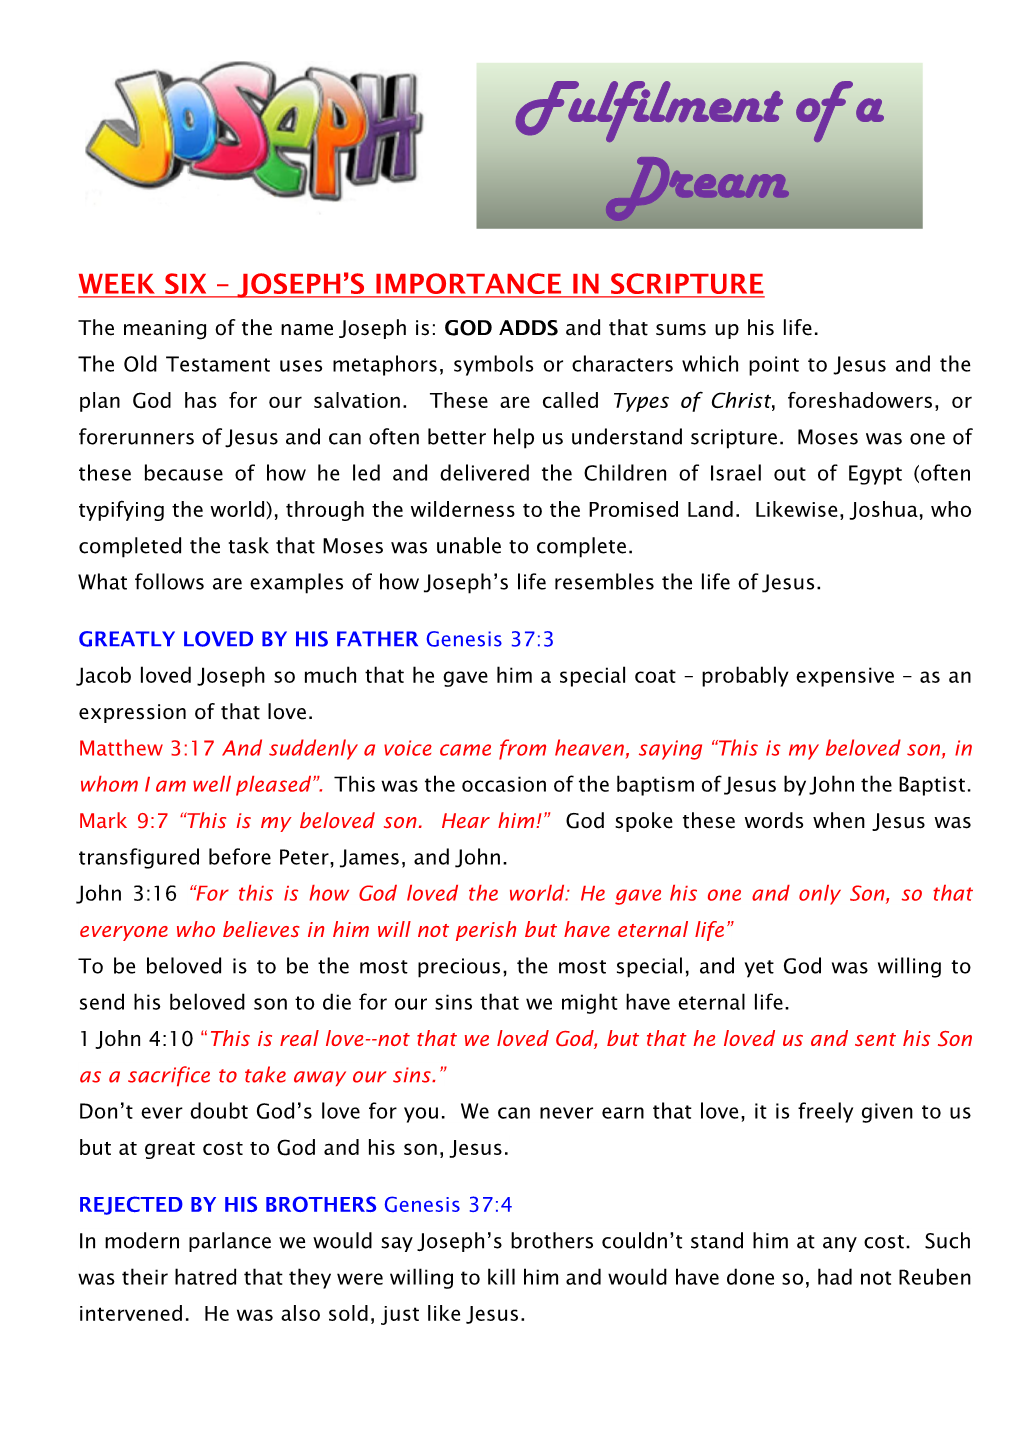 Joseph's Importance in Scripture